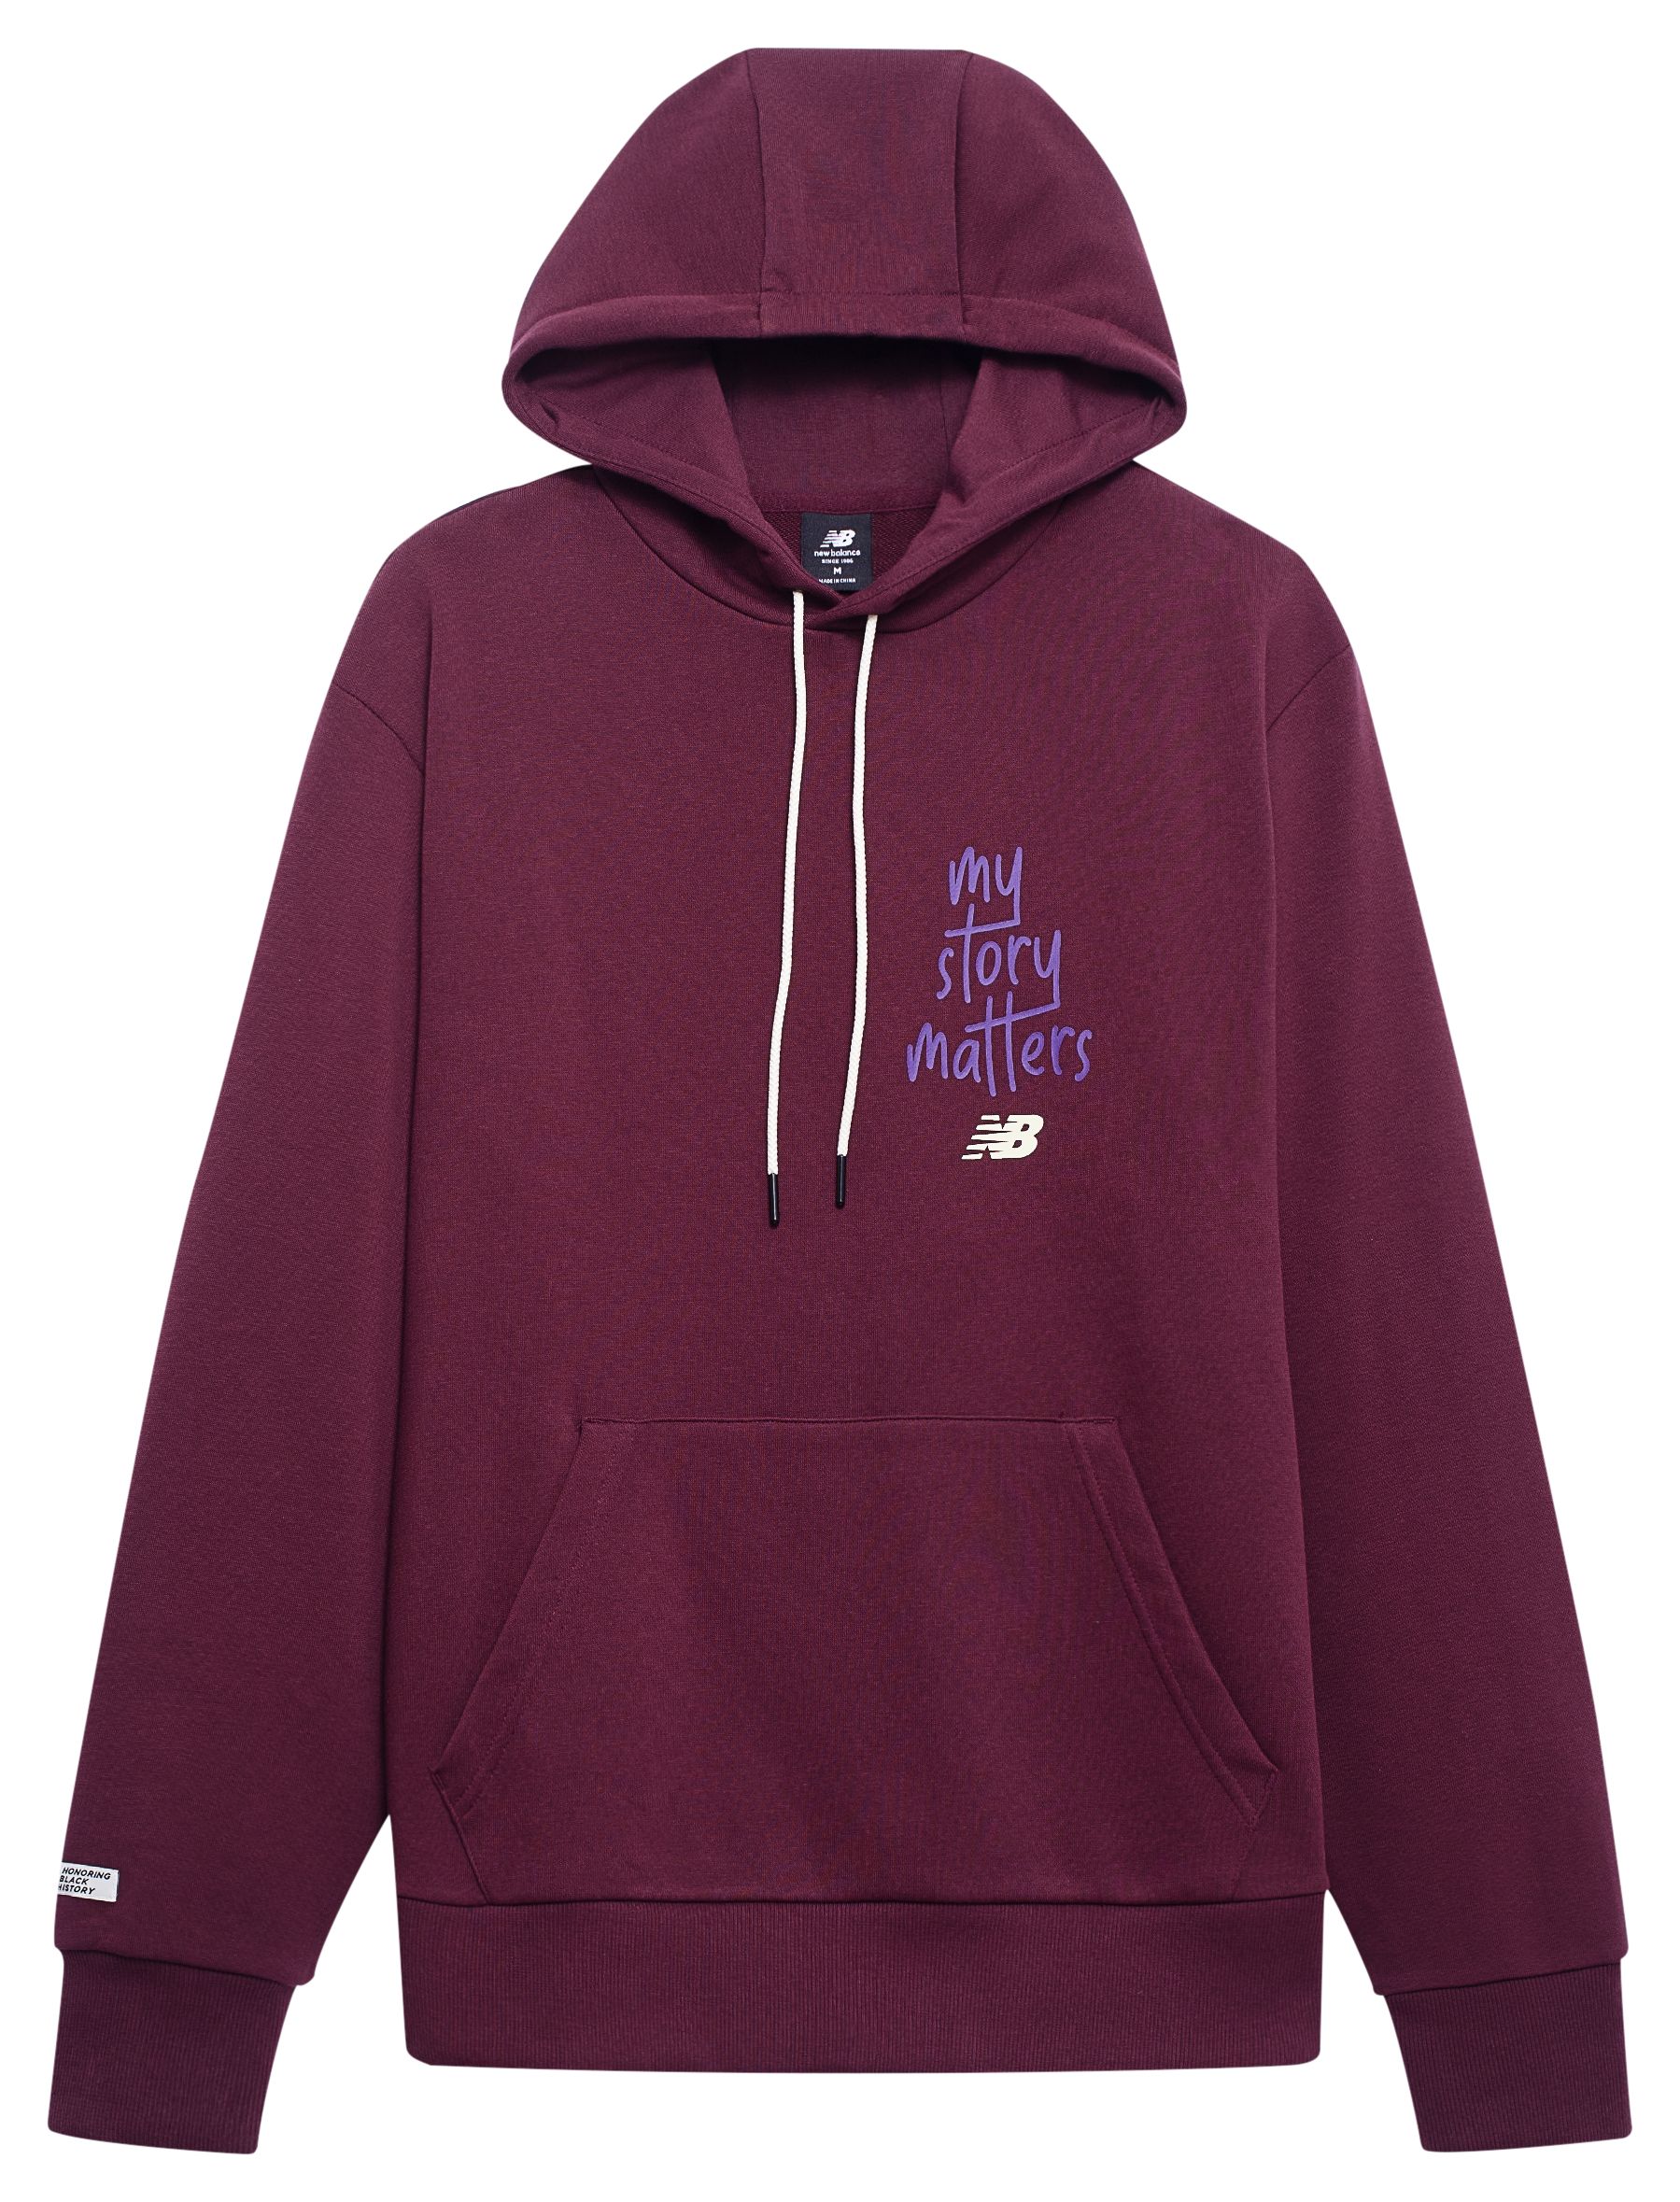 new balance hoodie burgundy